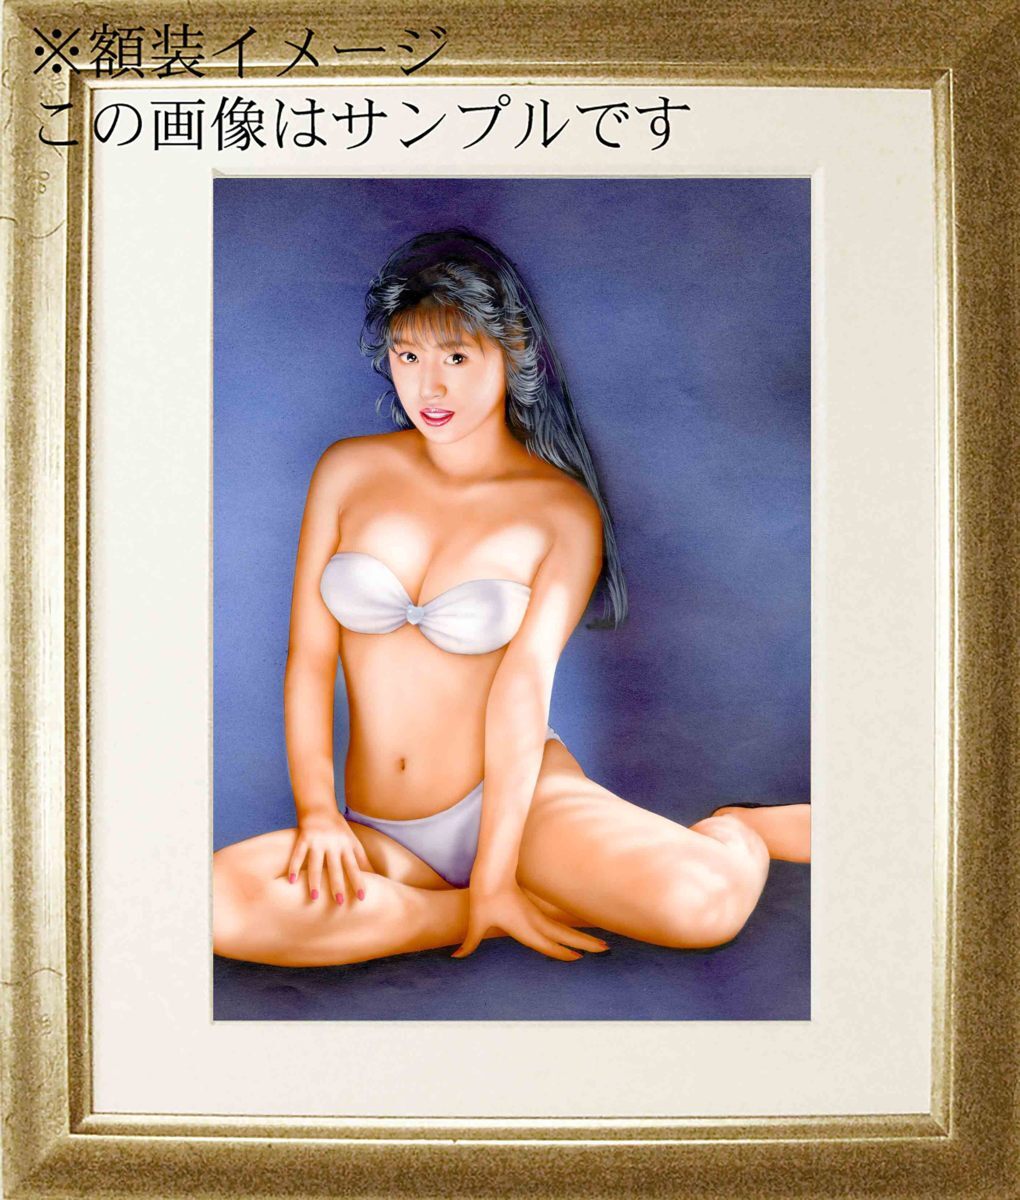 ¡Agotado! Goro Ishikawa Portada de revista mensual Impresión de mujer hermosa Emily, cuadro, acuarela, retrato